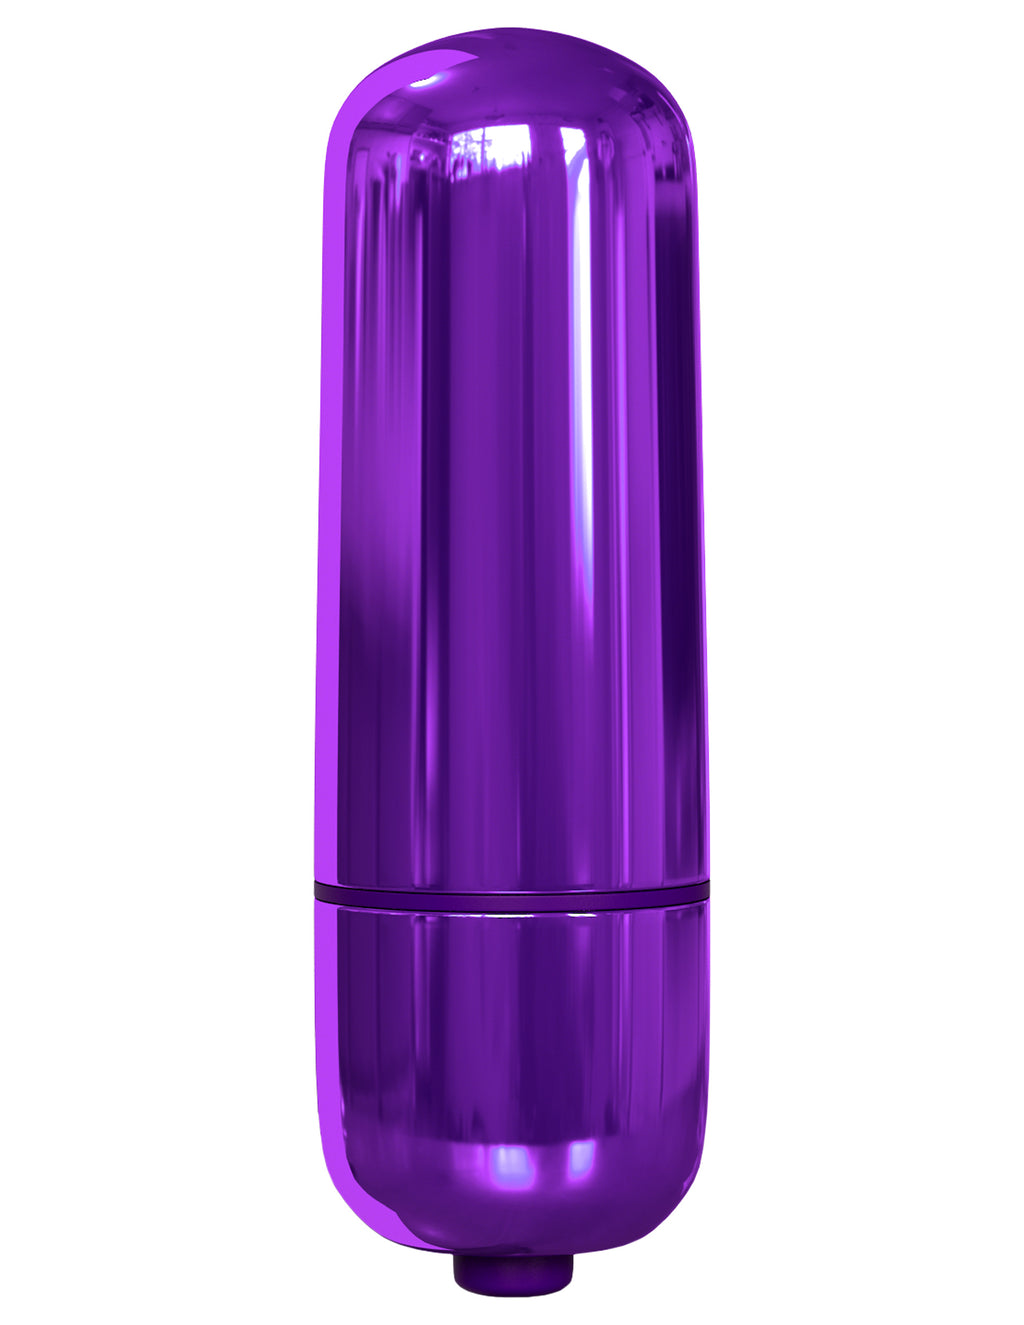 Classix Pocket Bullet - Purple PD1960-12